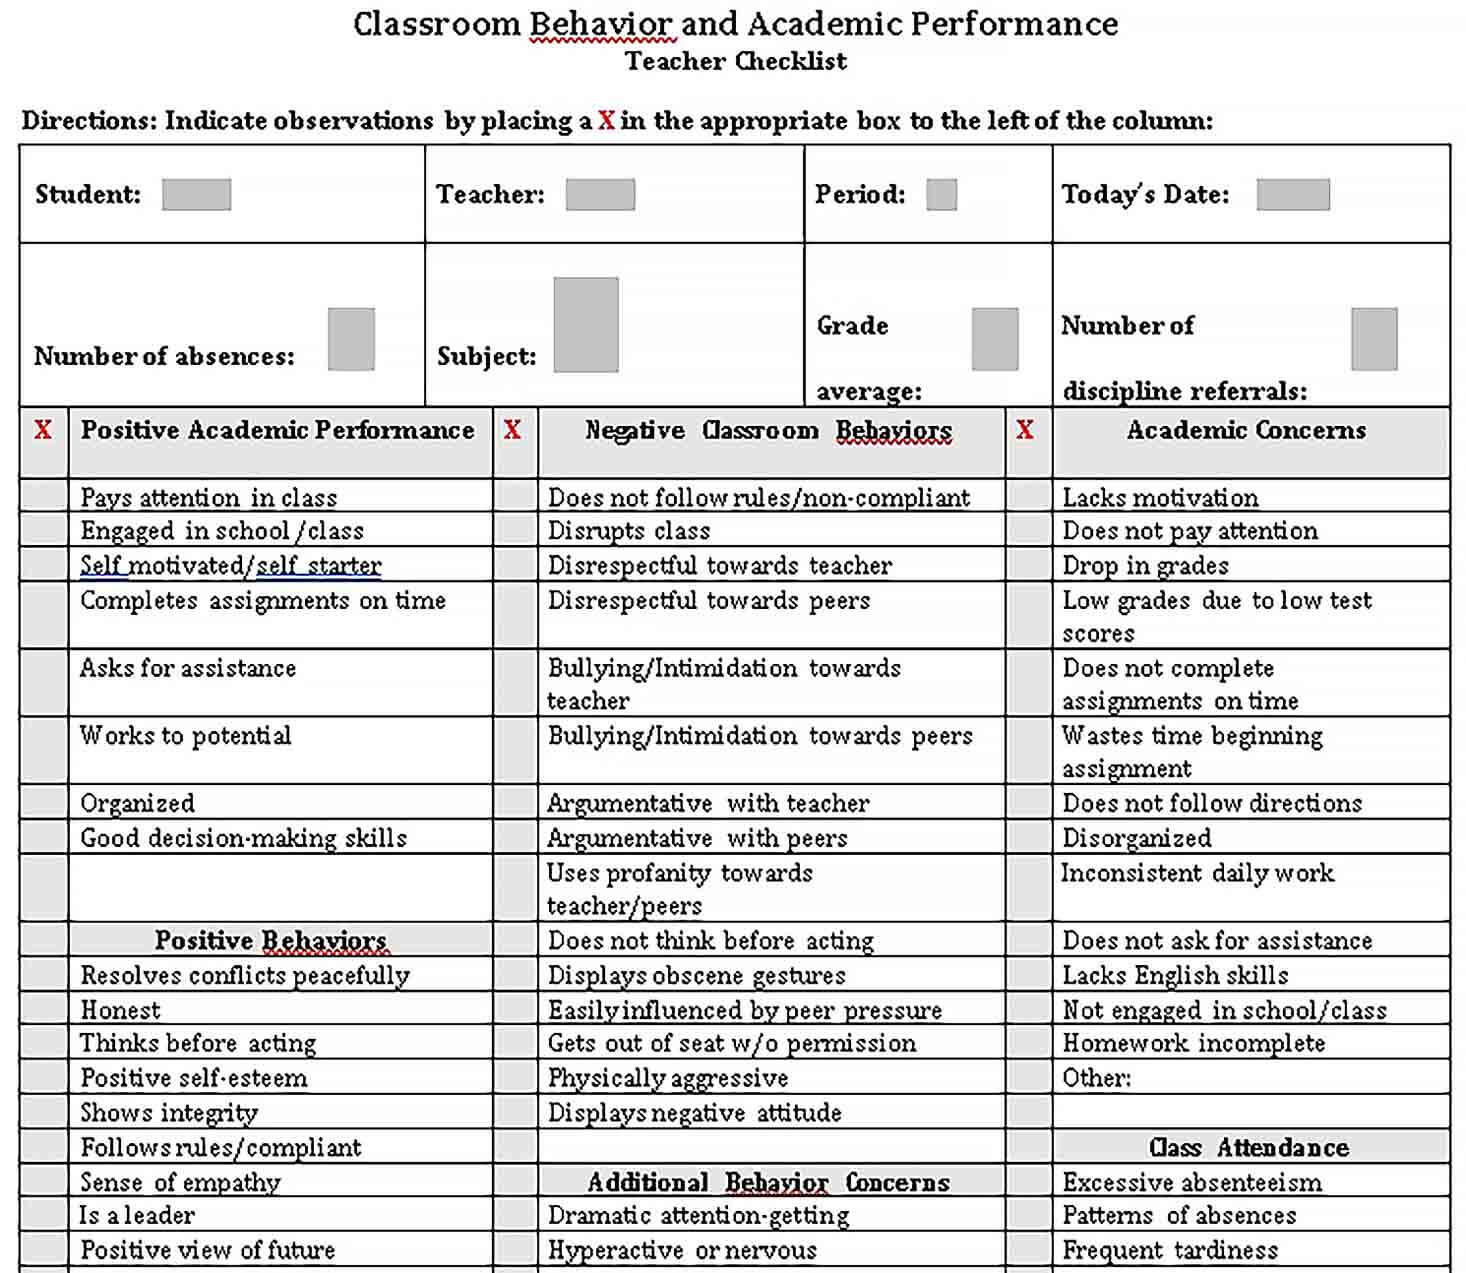 Sample Behavior Checklist for Classroom